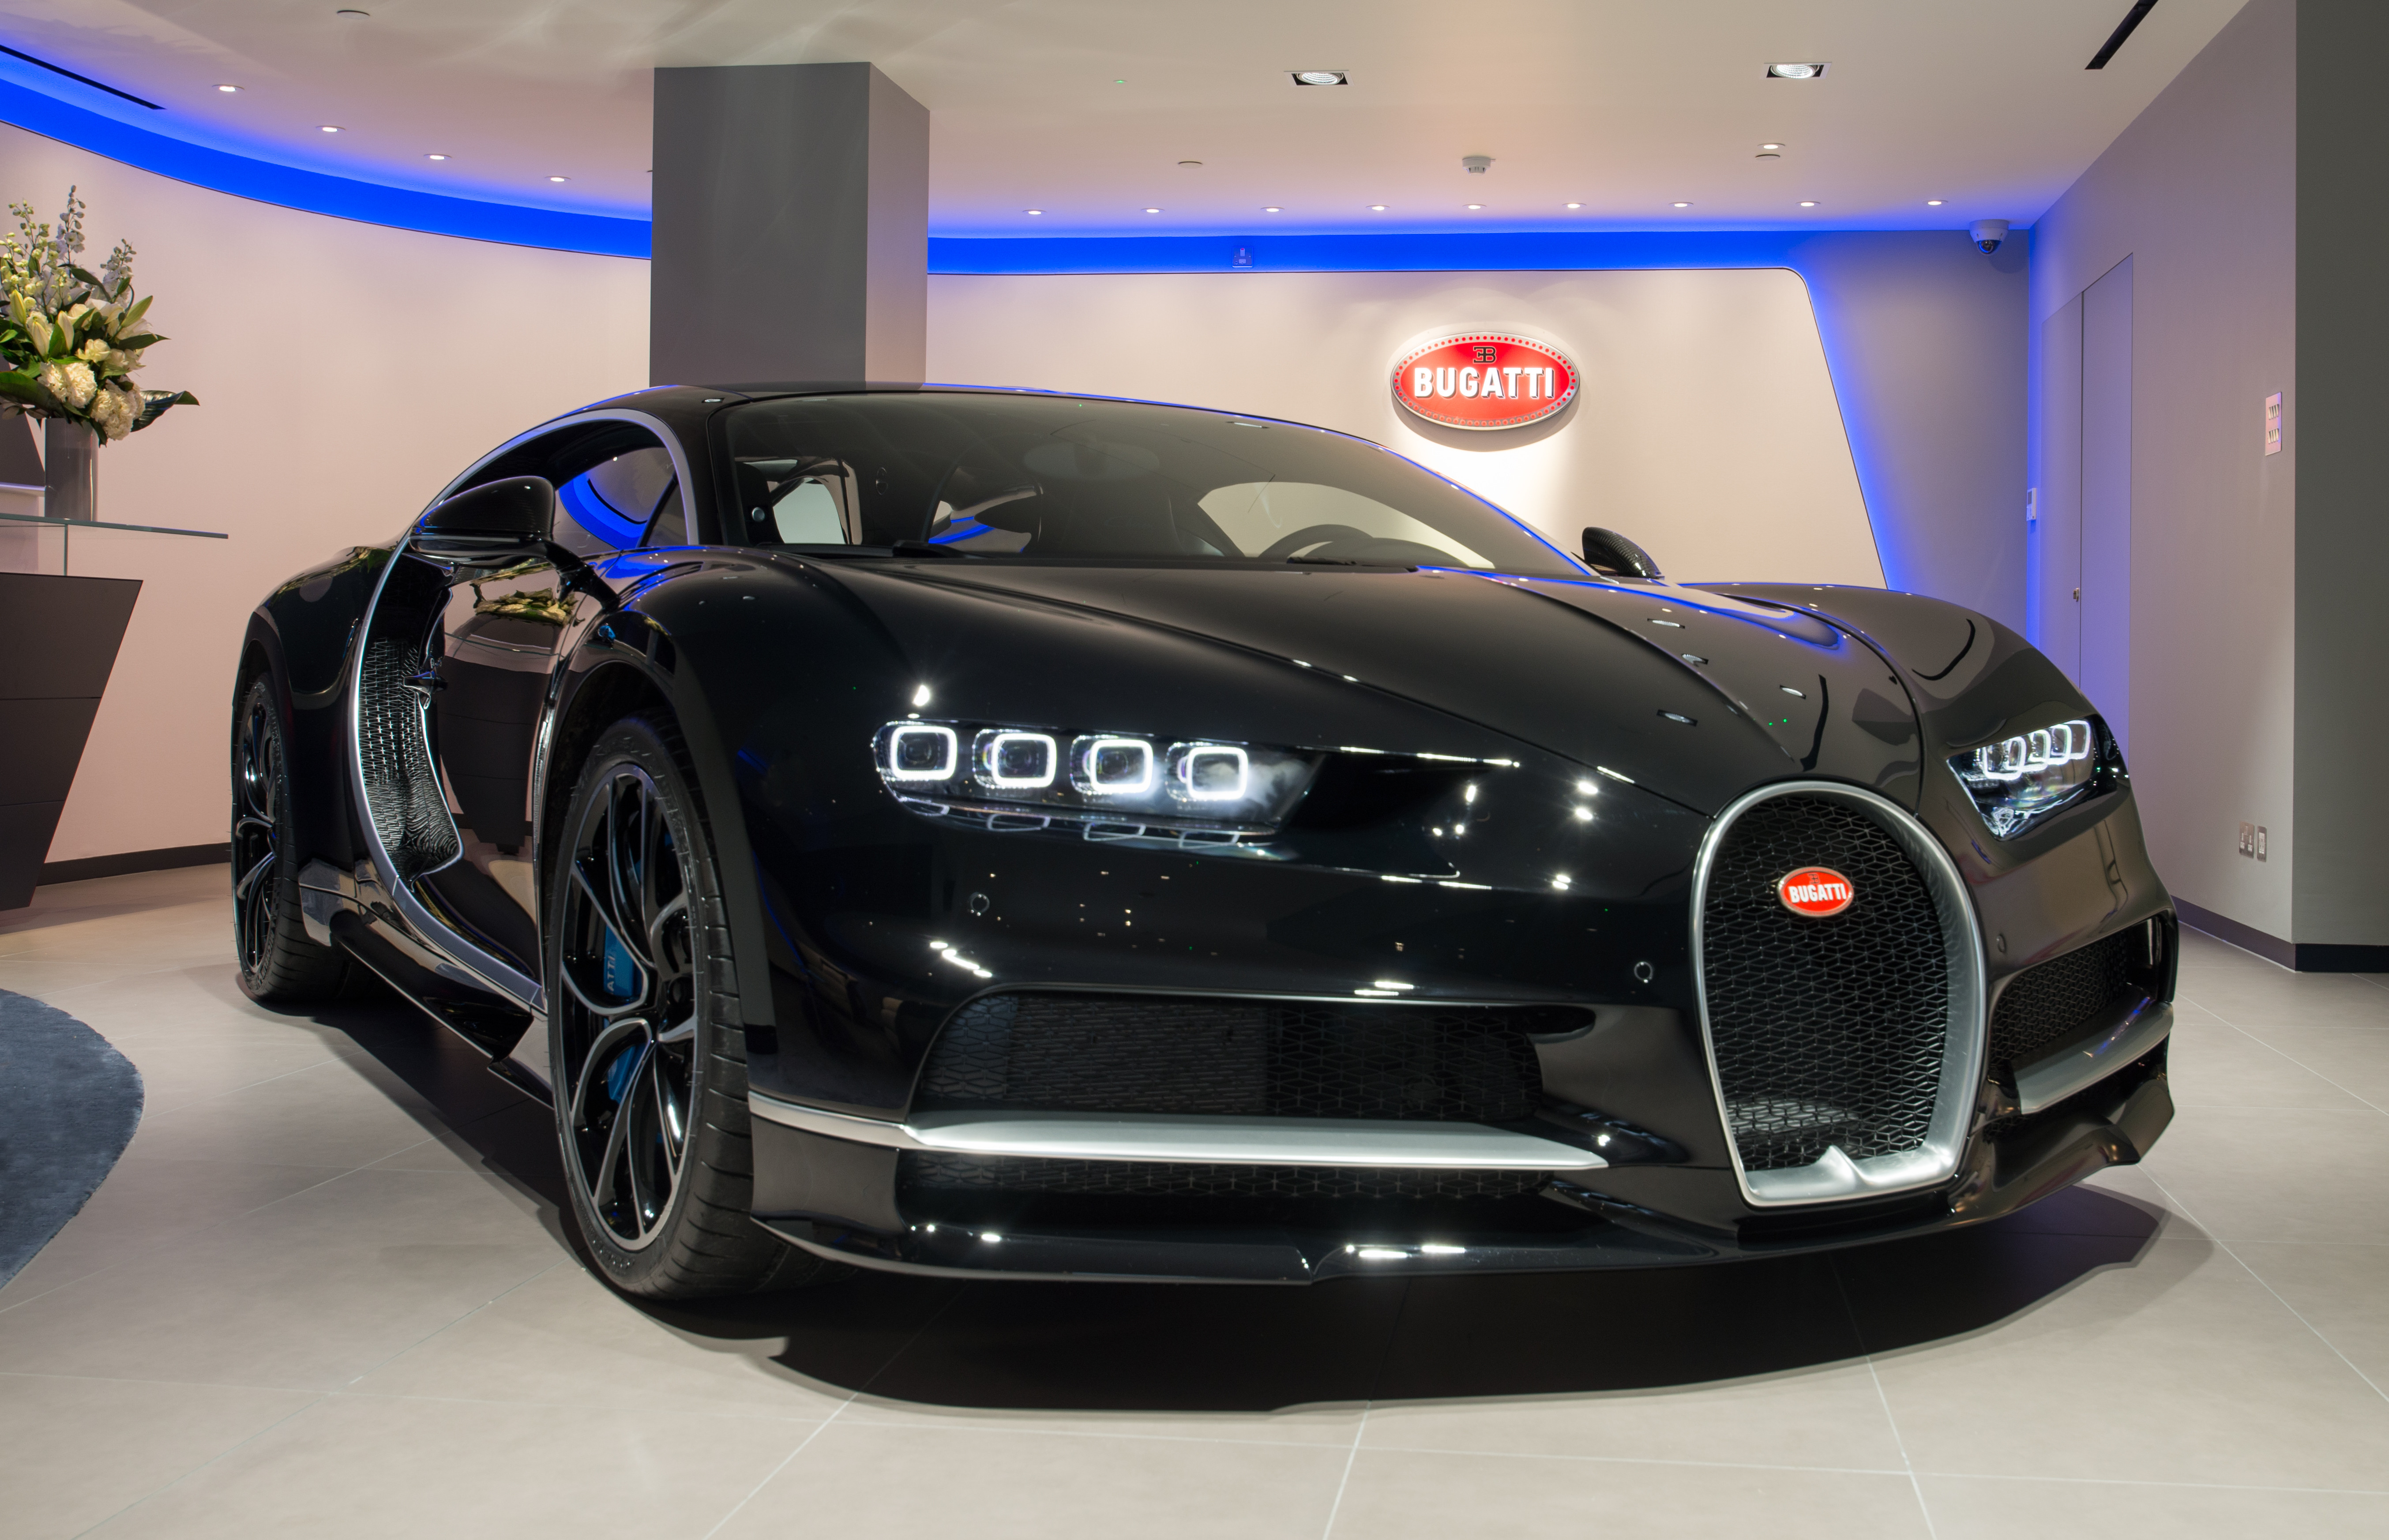 Bugatti reopens newly designed showroom in London – Bugatti Newsroom